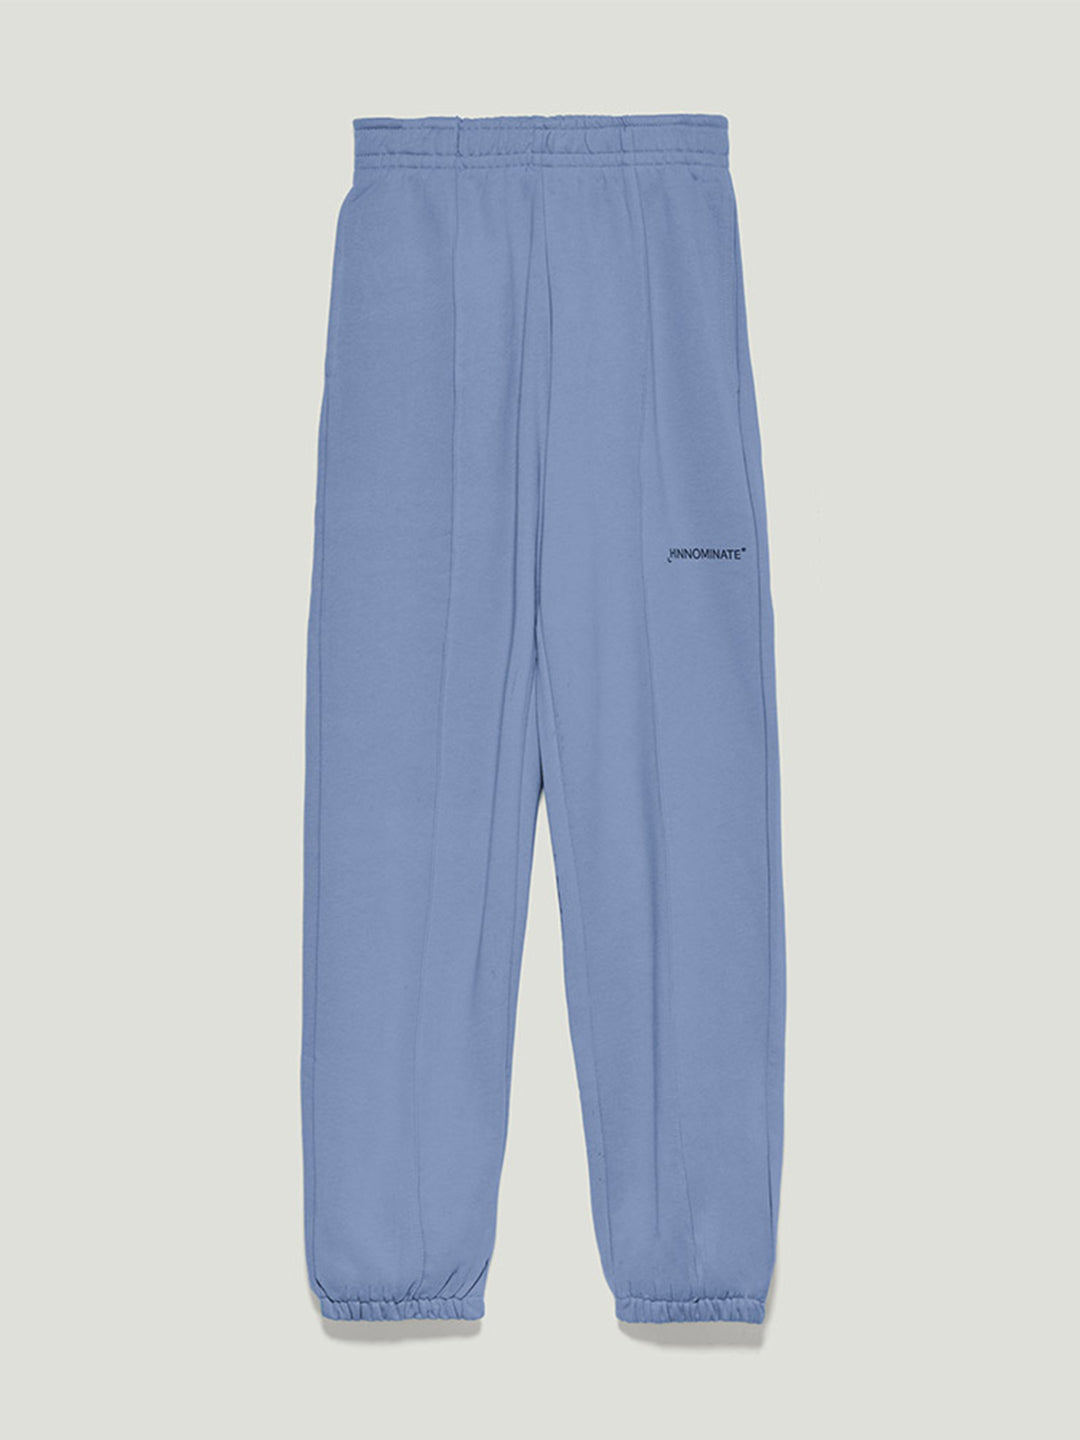 Hinnominate pantalone azzurro in felpa